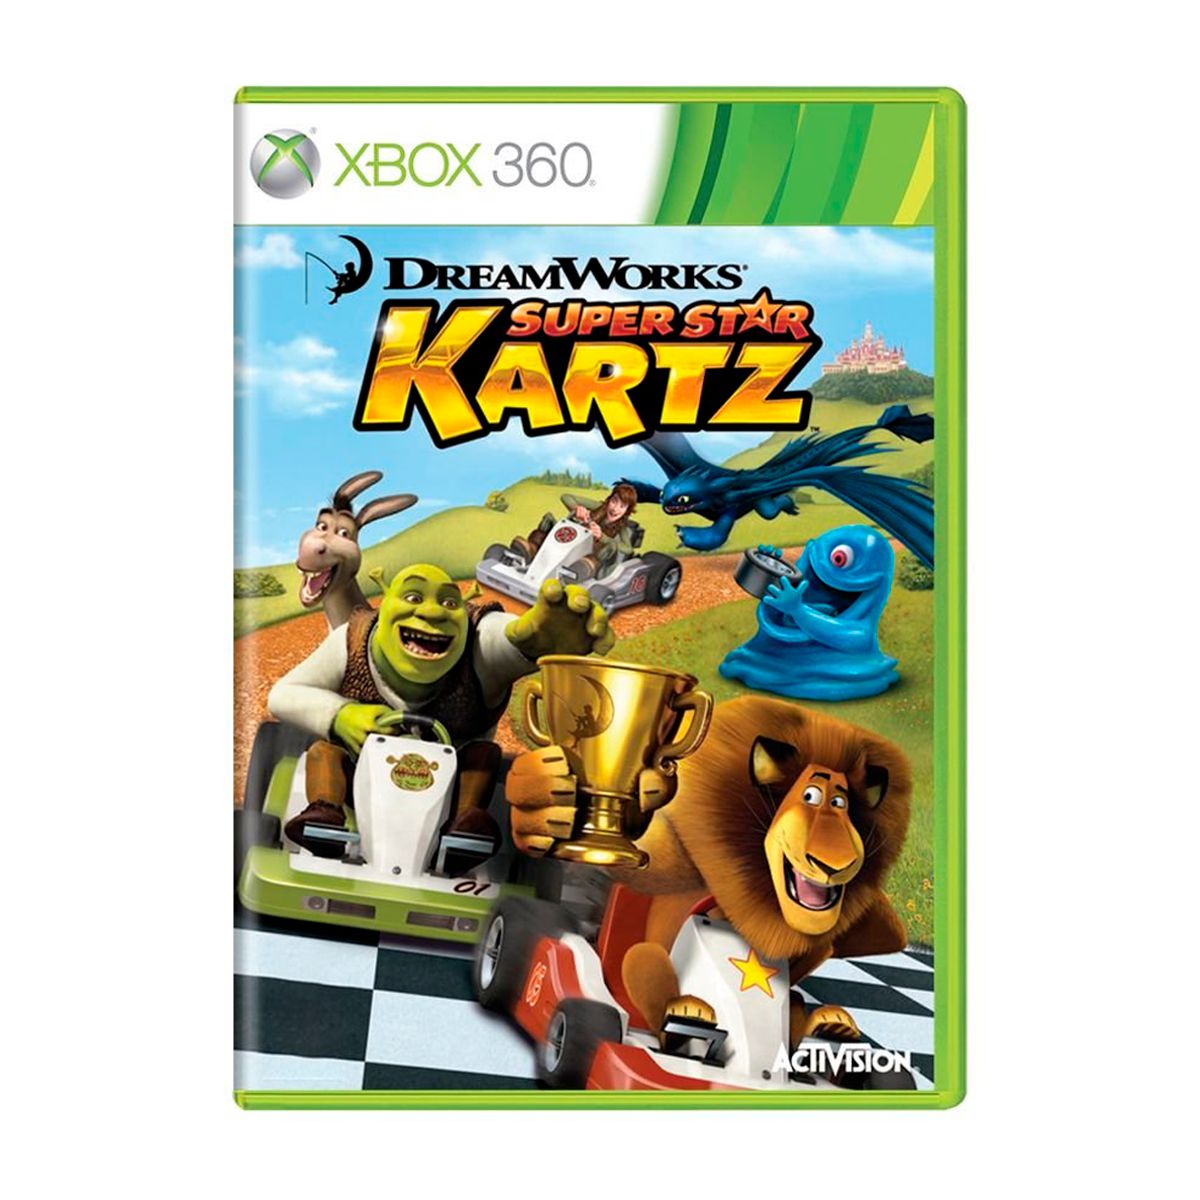 Jogos 3d Xbox 360 Corrida